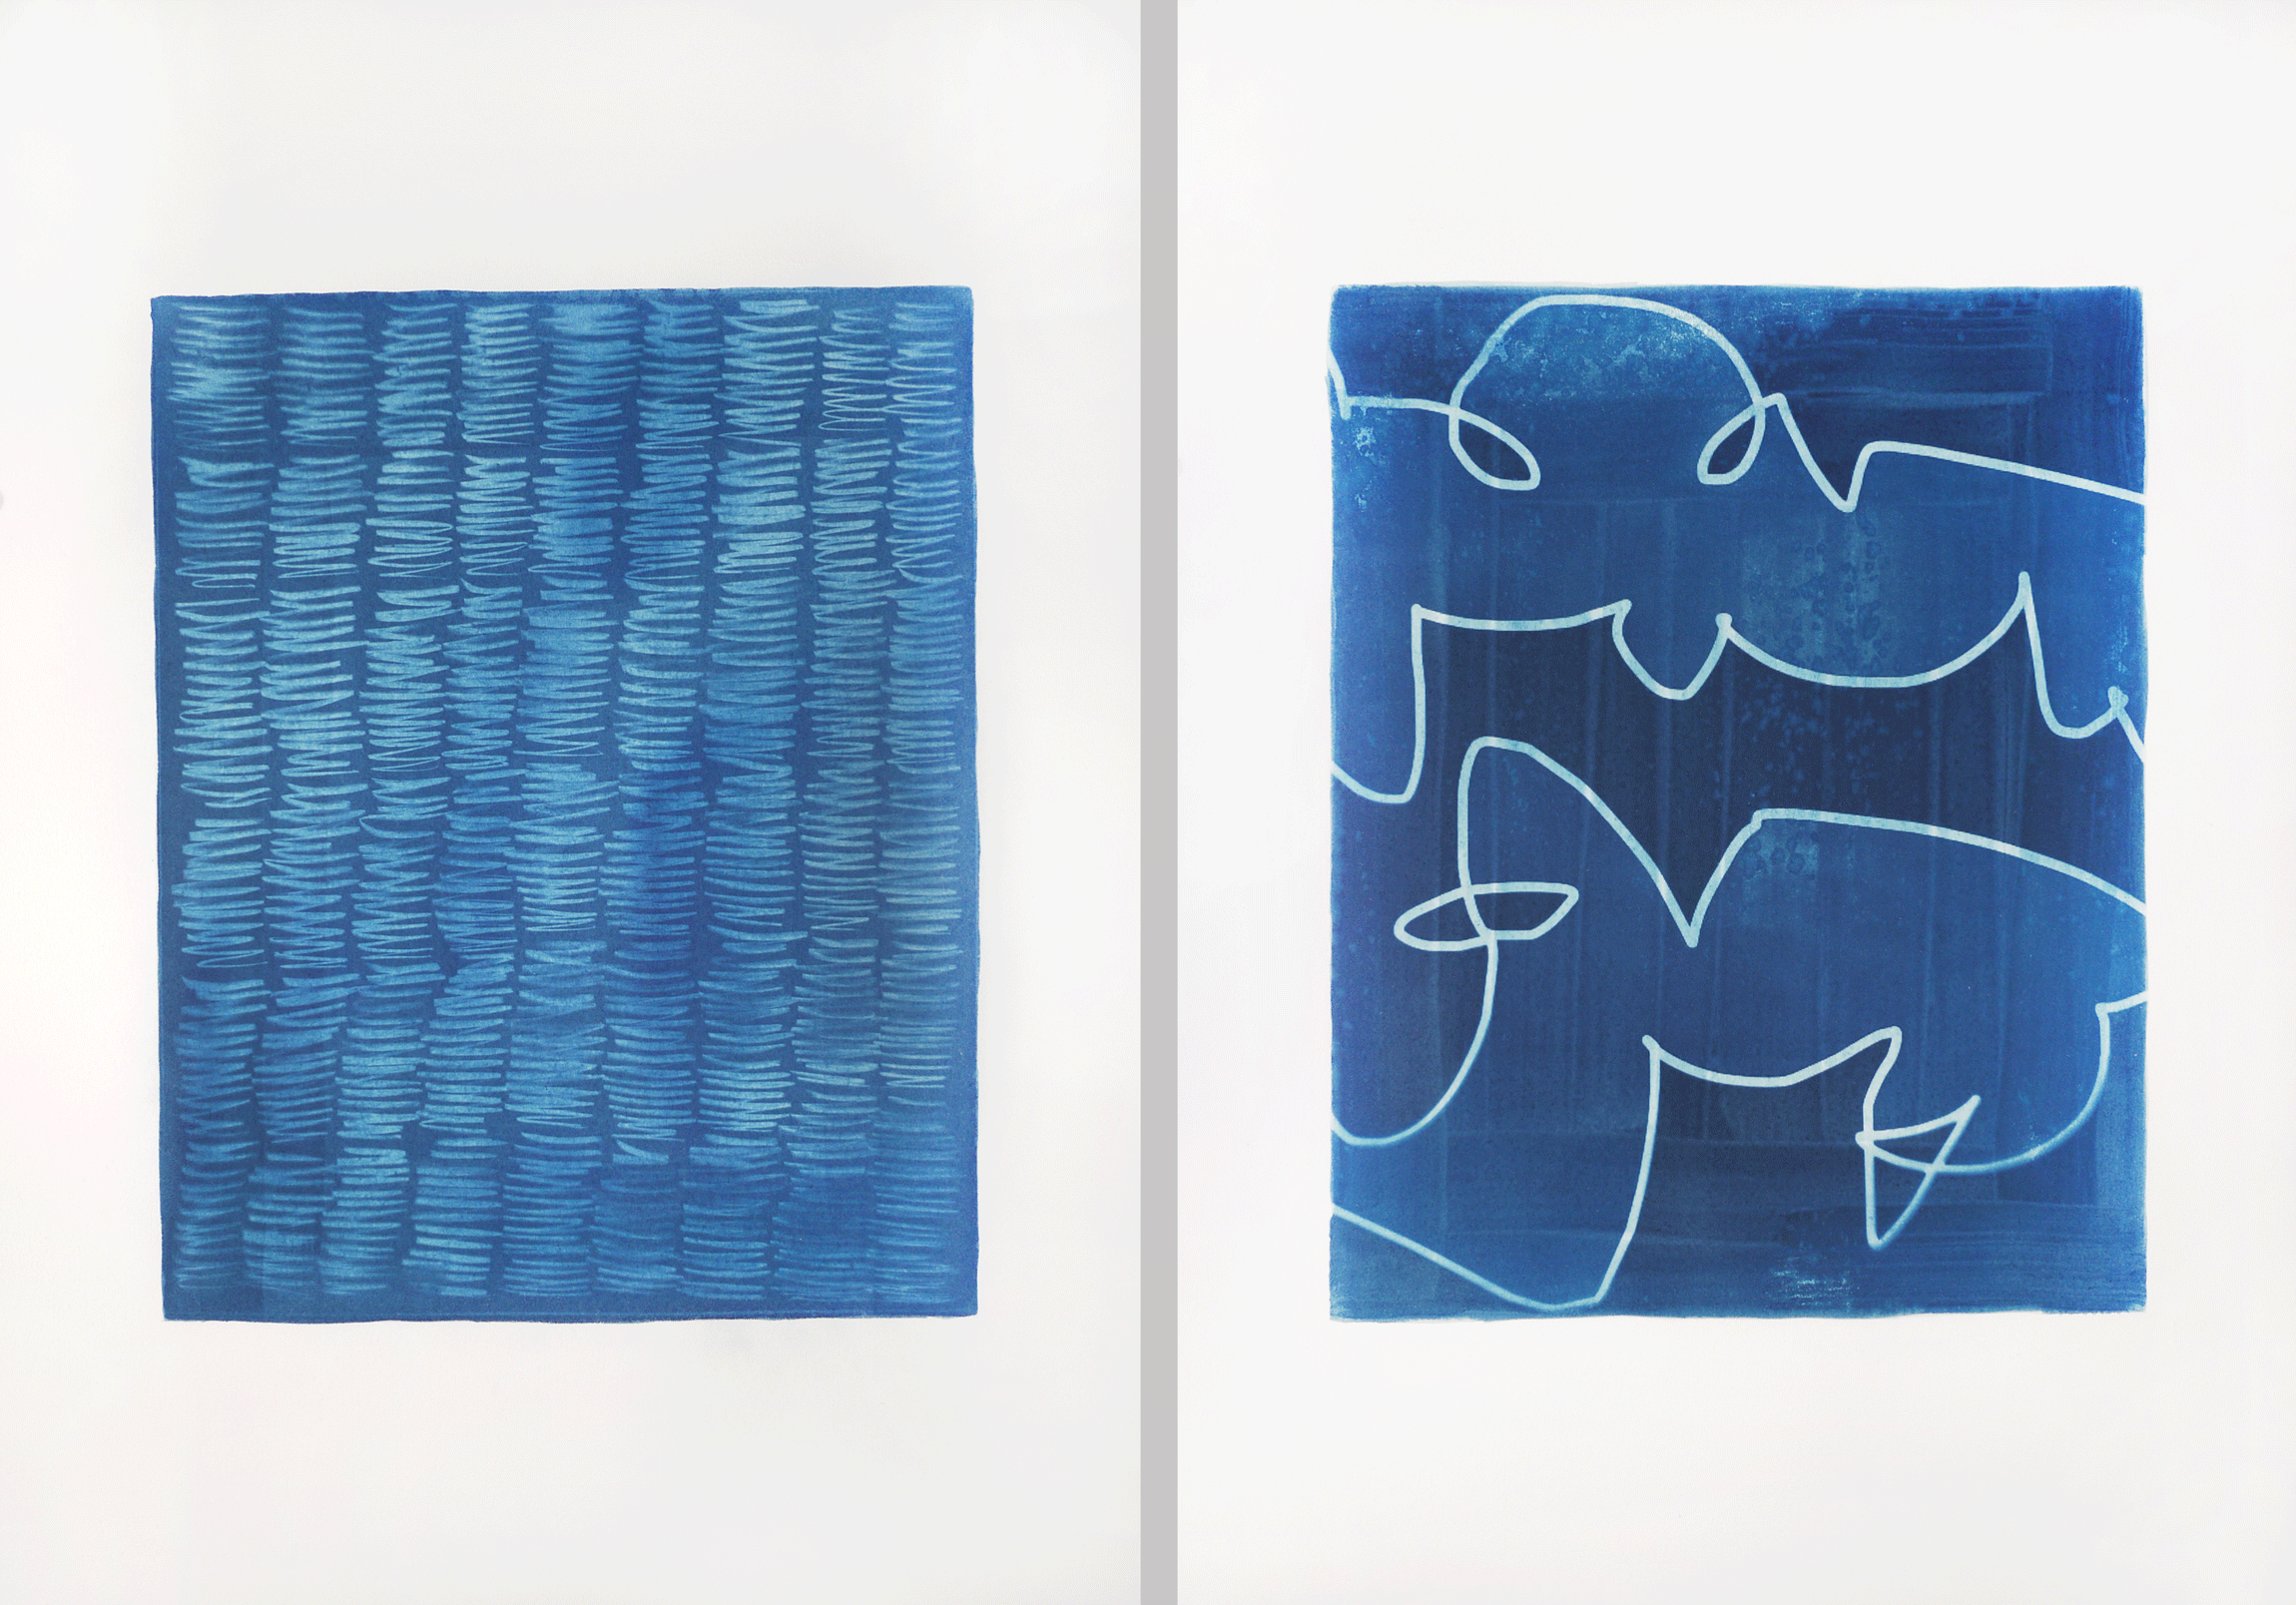 Sarah Comfort, Untitled (Blue Drawings), 2016, cyanotype on paper; Untitled (Blue Drawings), 2016, cyanotype on paper, 12"x16" (each).